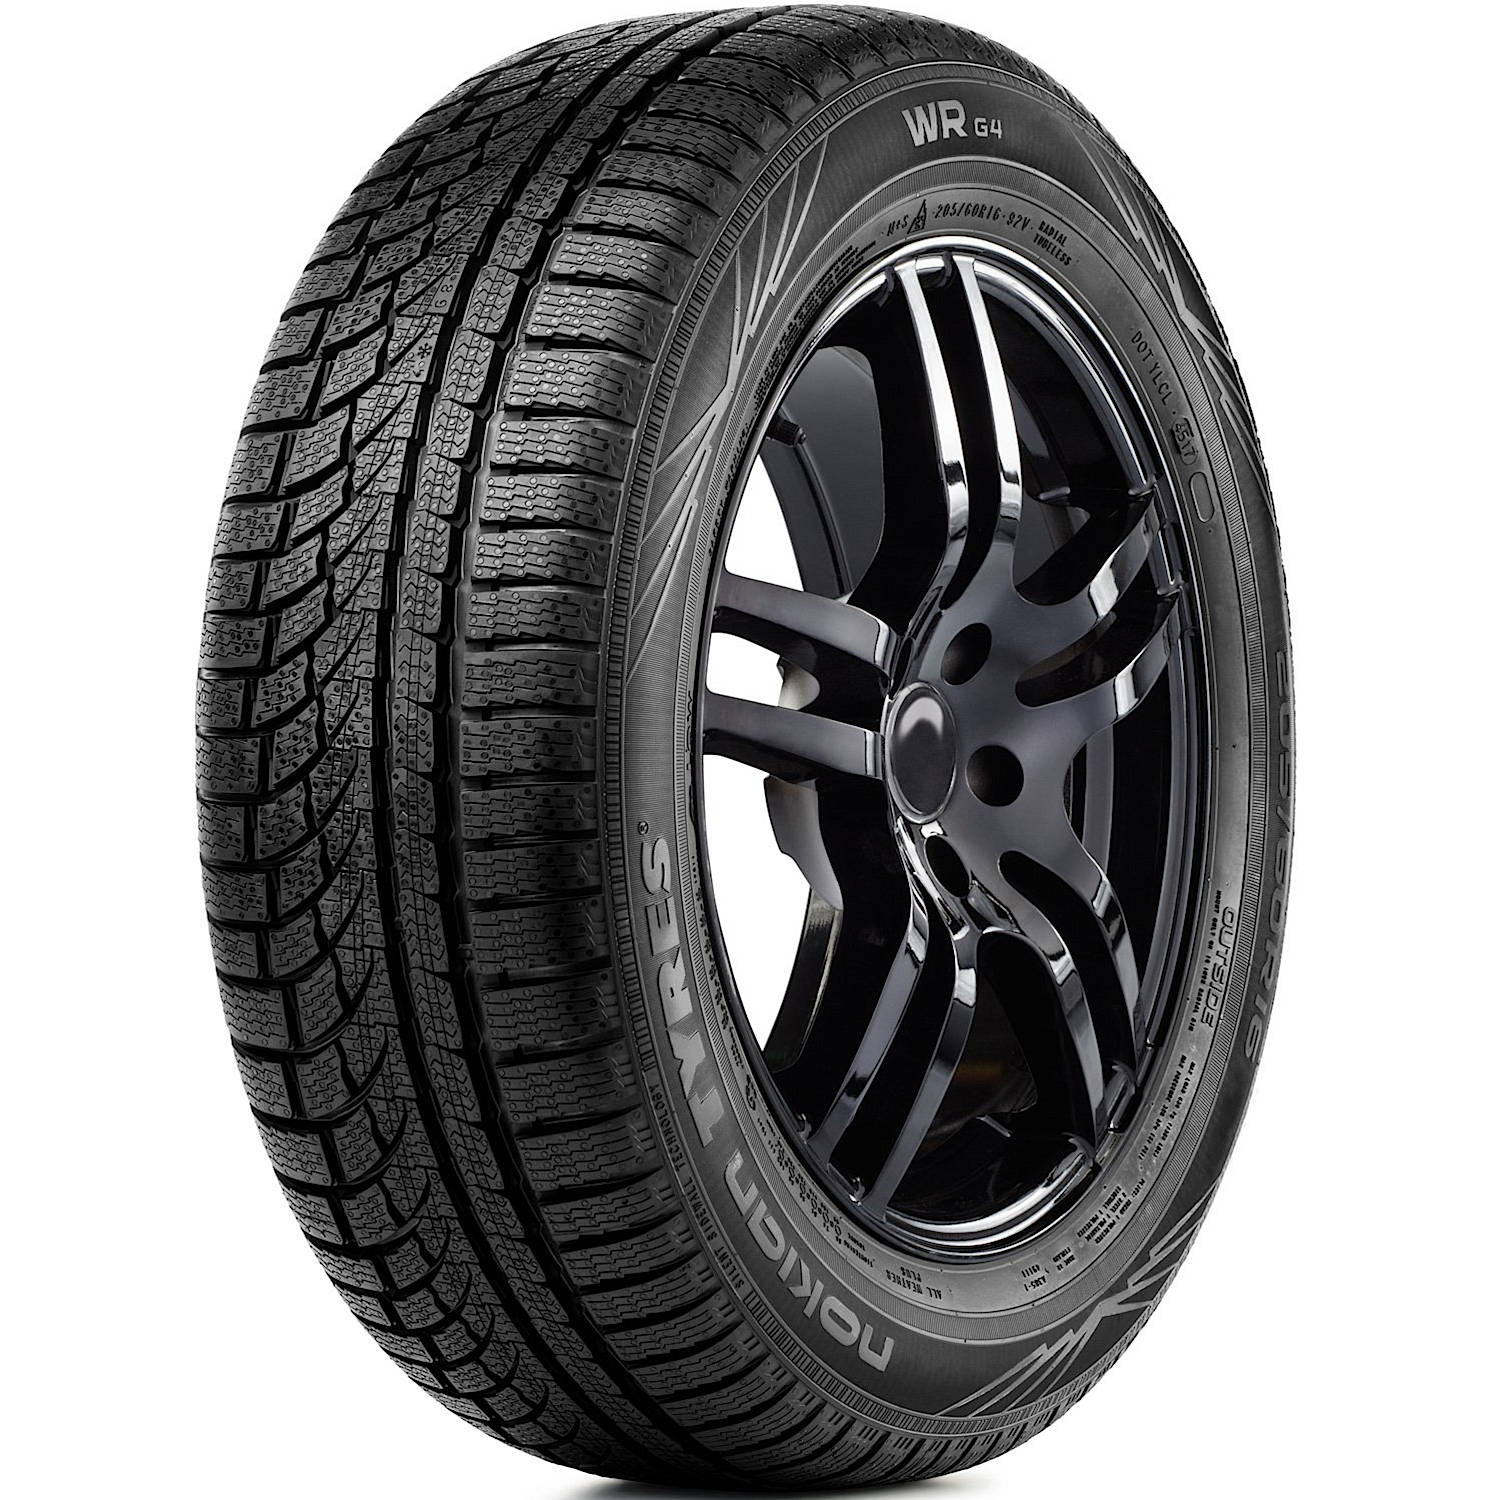 NOKIAN WR G4 235/50R18 (27.3X9.3R 18) Tires